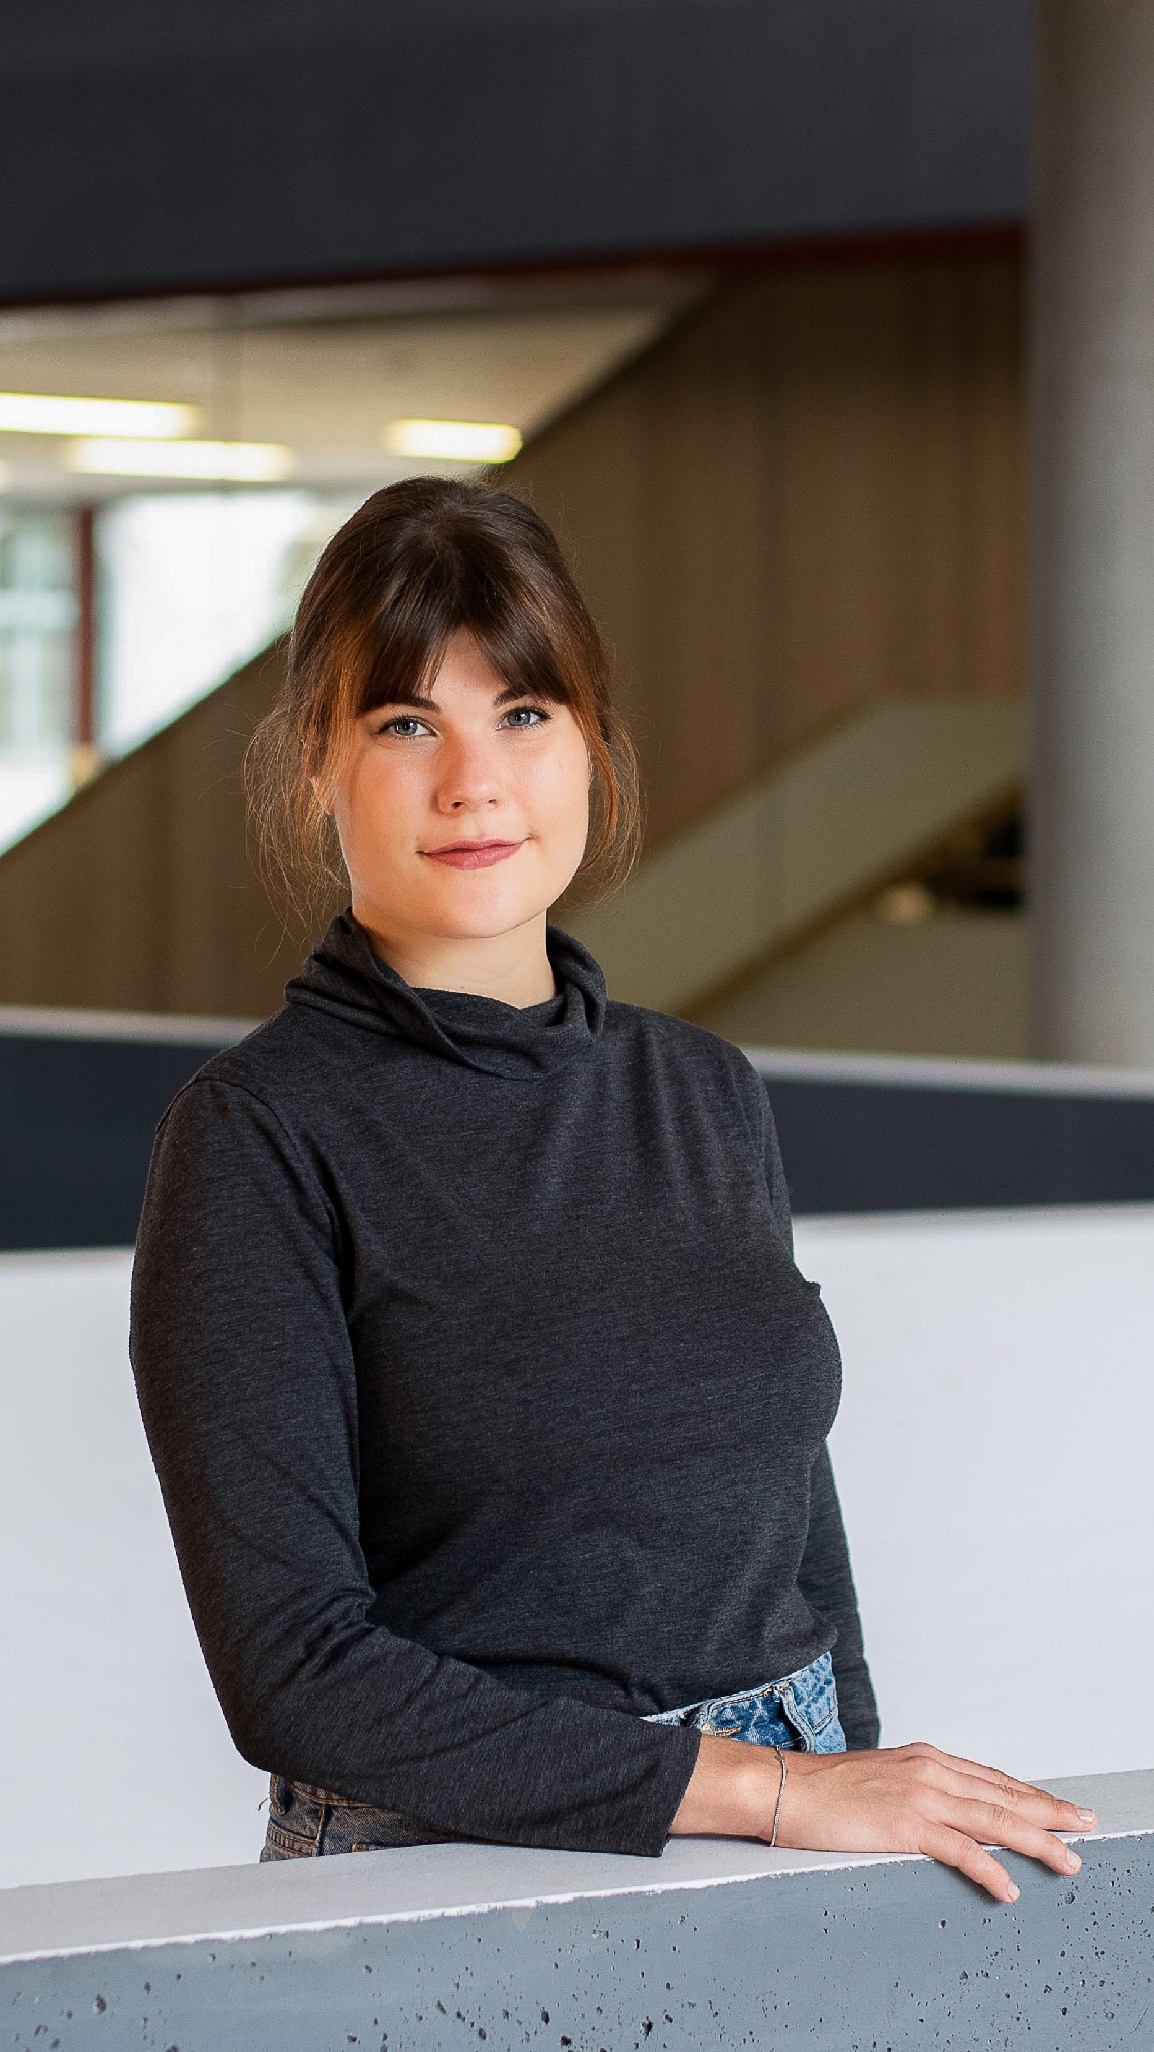 Anna studiert Immobilienmanagement an der Uni Weimar, Anna Schroedter